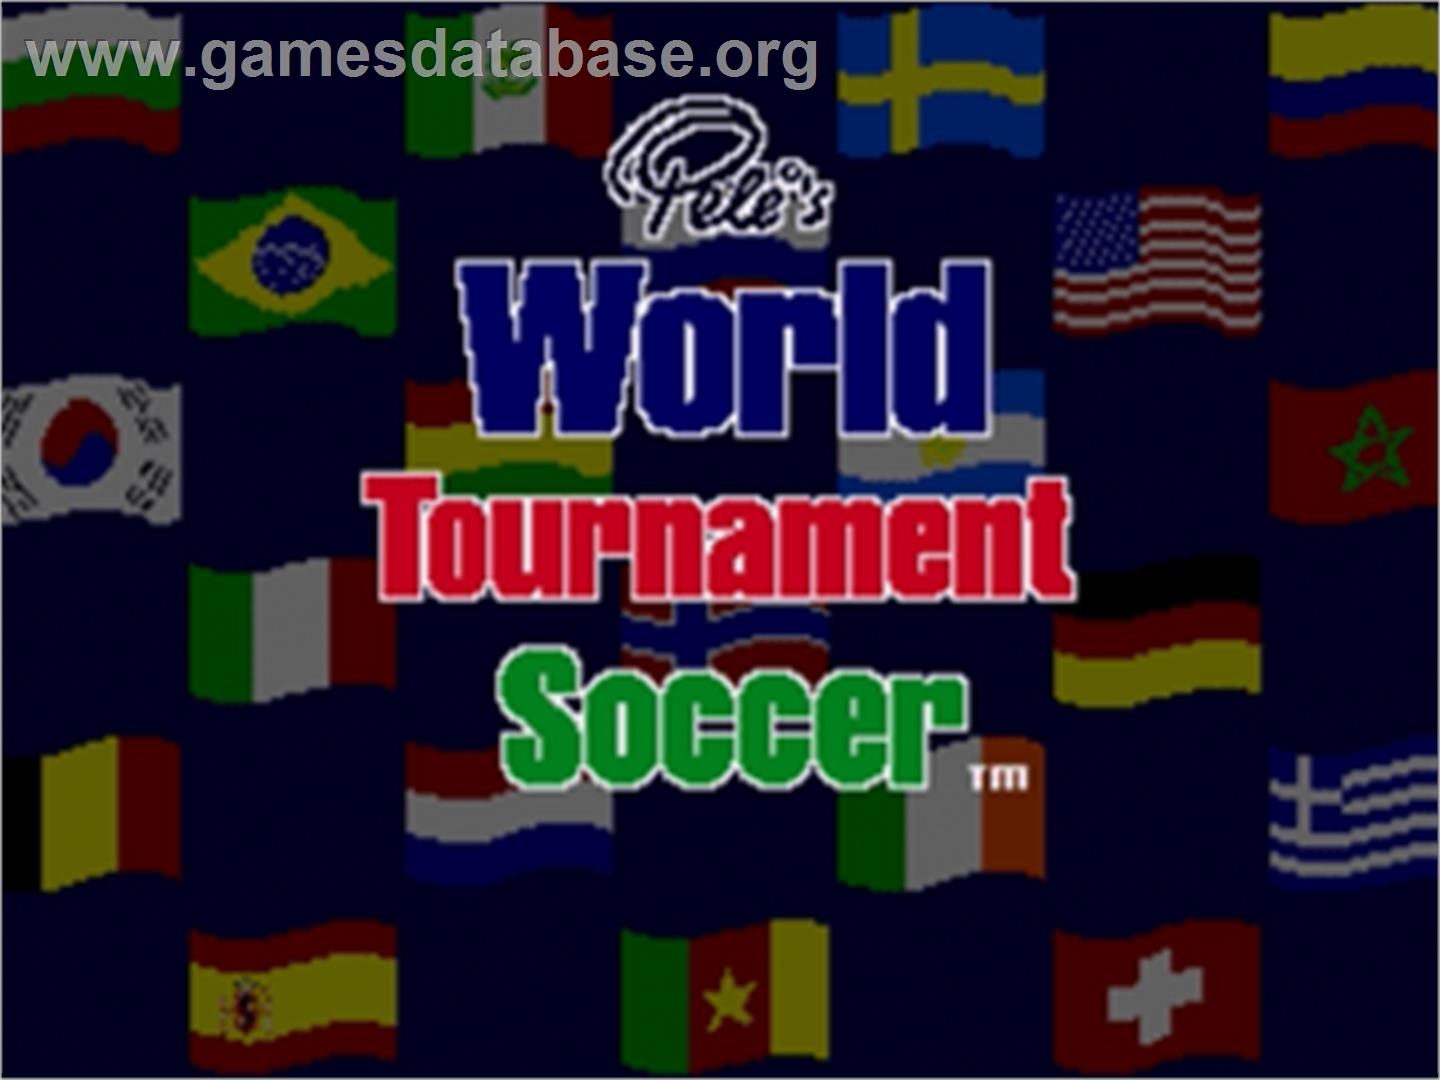 Pelé II: World Tournament Soccer - Sega Nomad - Artwork - Title Screen